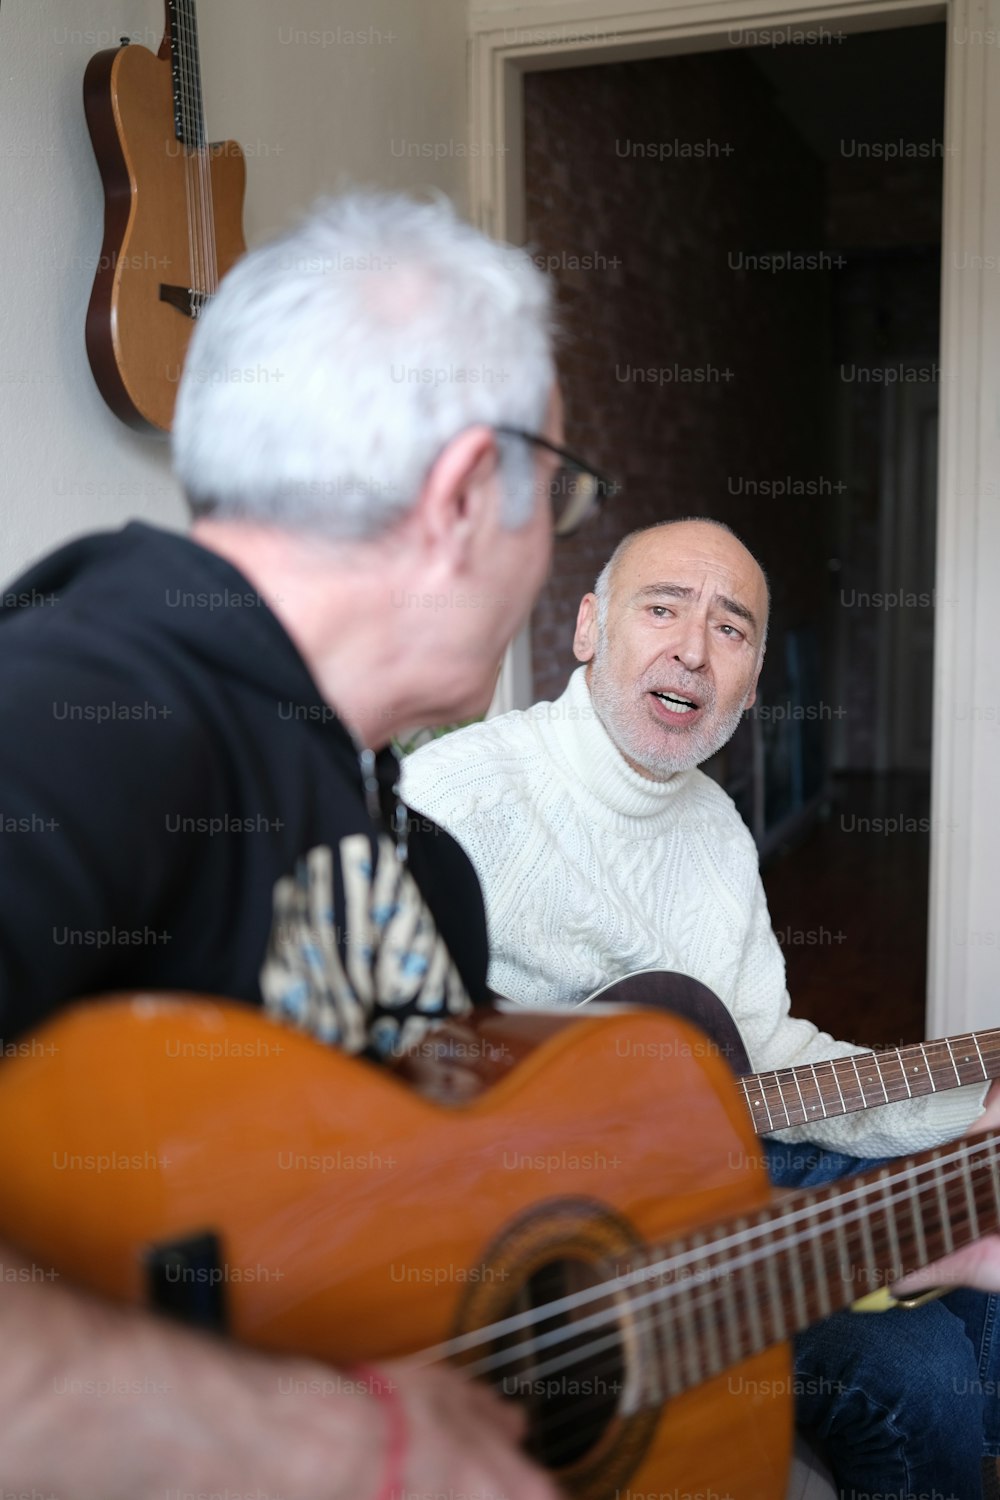 a man playing a guitar next to another man